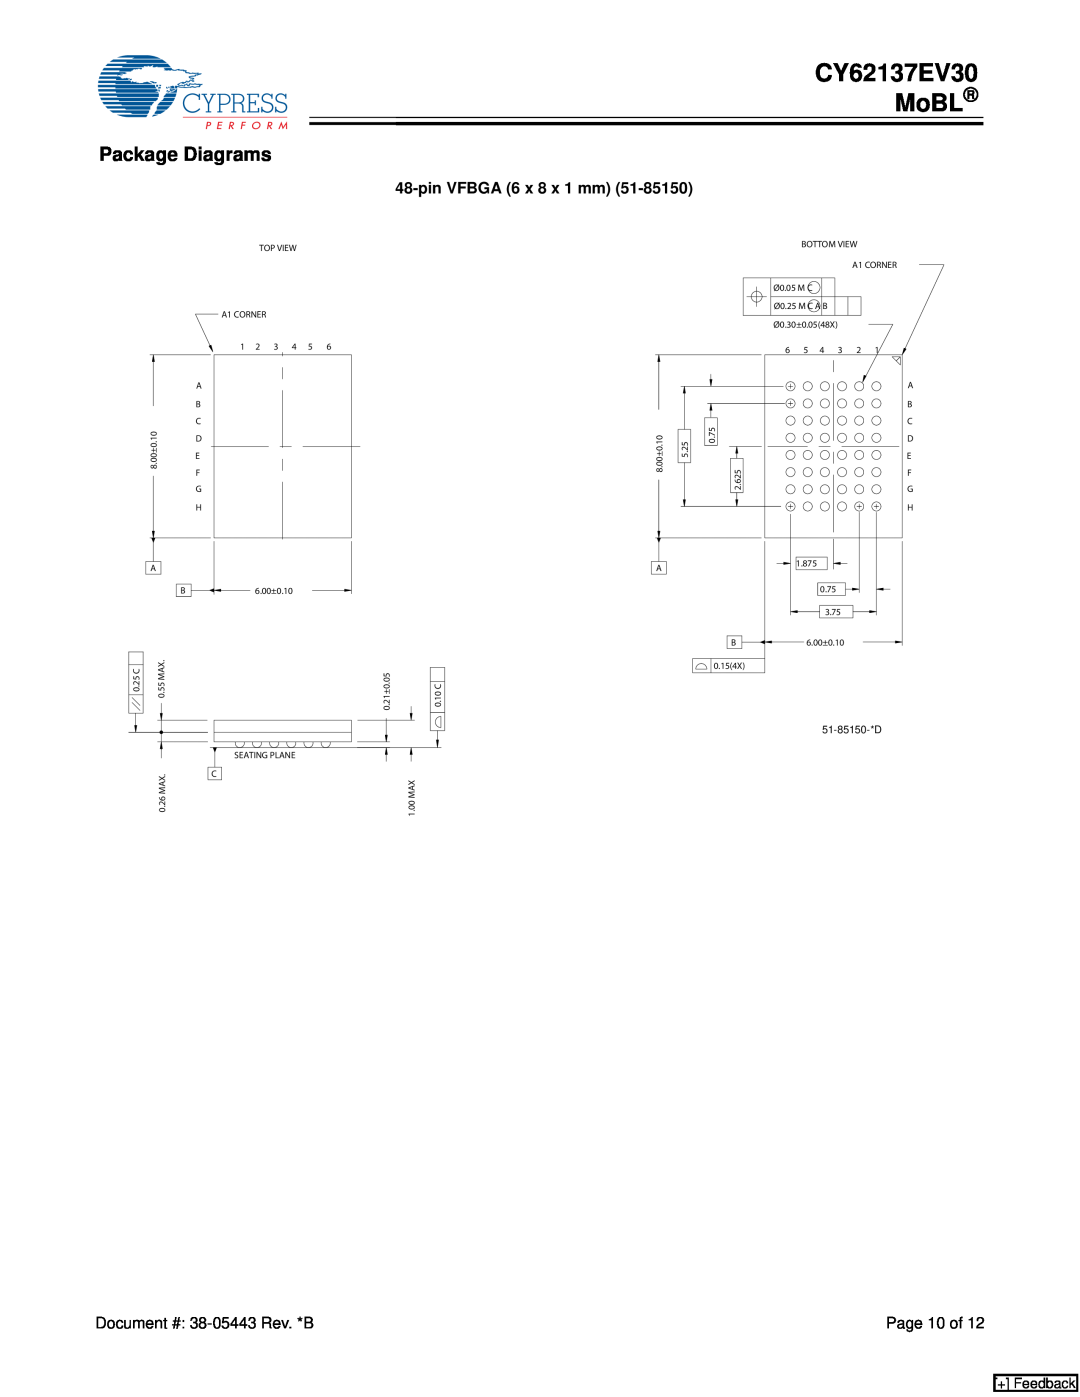 Cypress manual Package Diagrams, CY62137EV30 MoBL, pin VFBGA 6 x 8 x 1 mm, + Feedback 